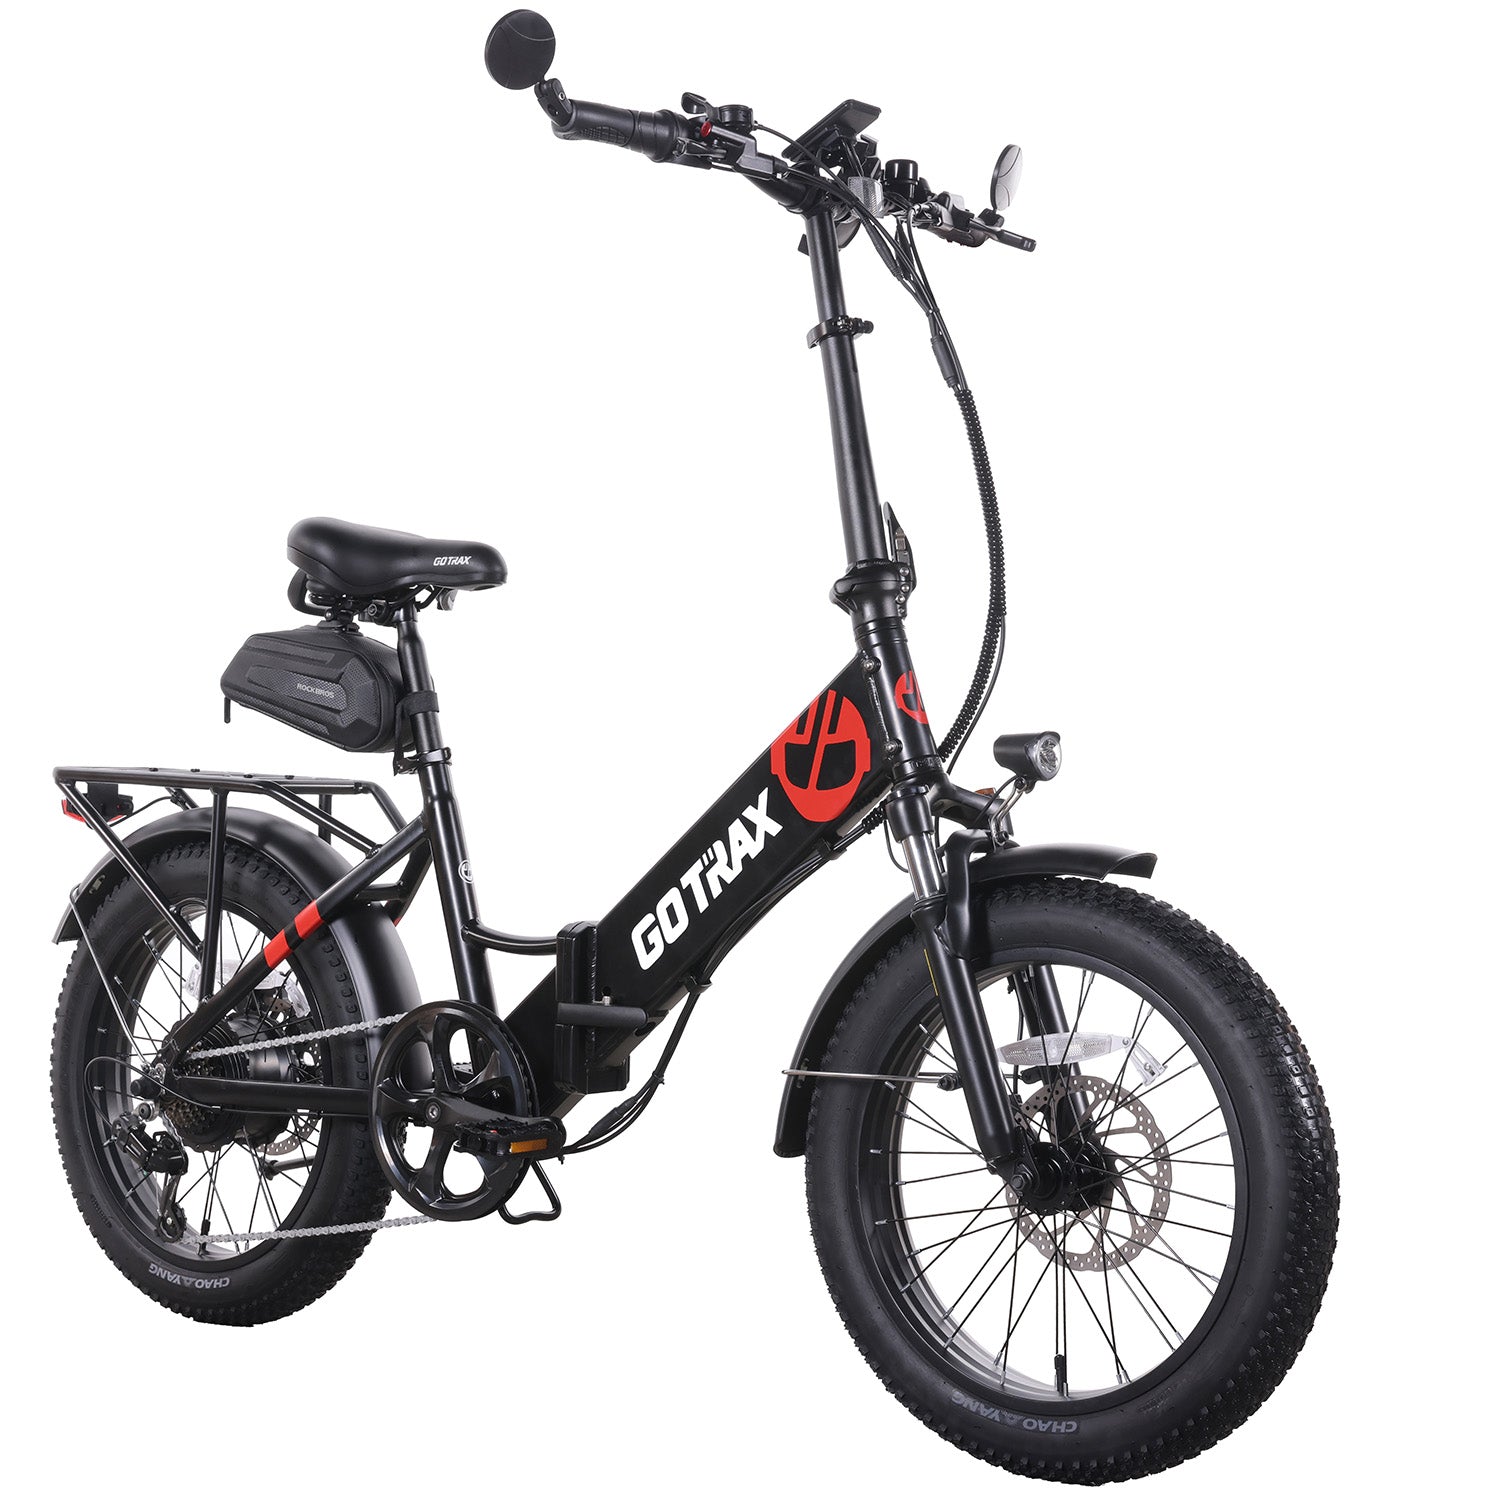 F2 Electric Bike - GOTRAX